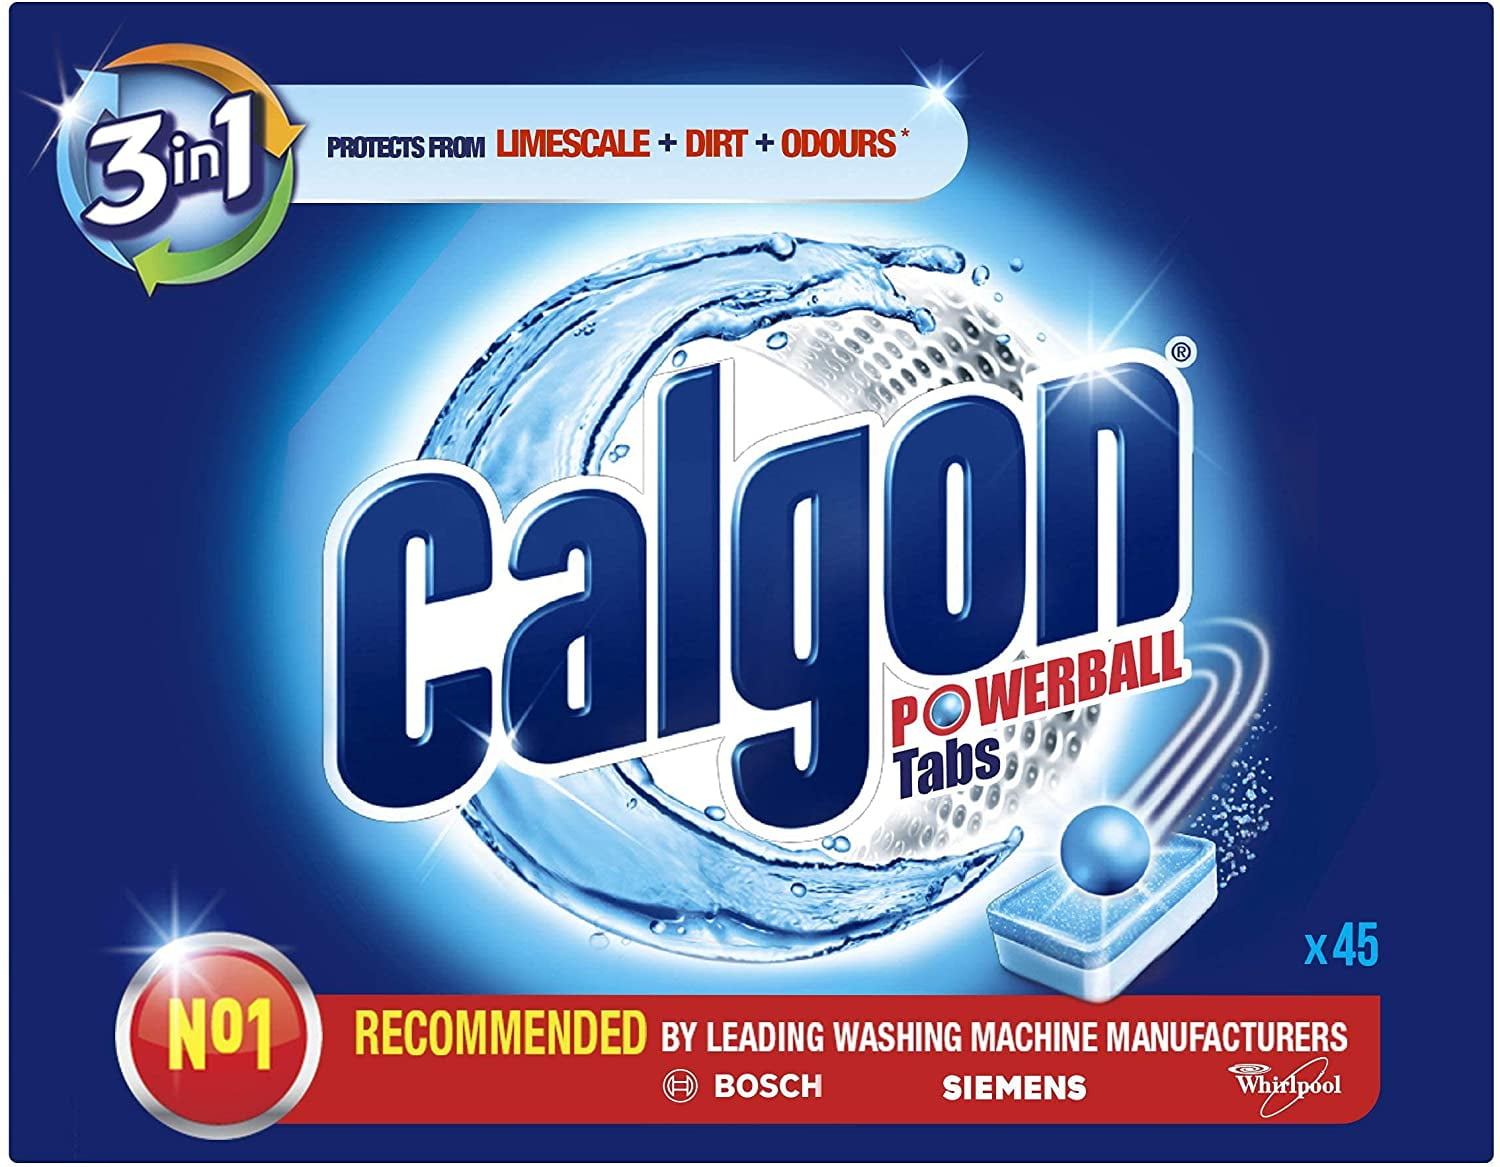  Calgon 3-in-1 Washing Machine Water Softener Gel, 2 x